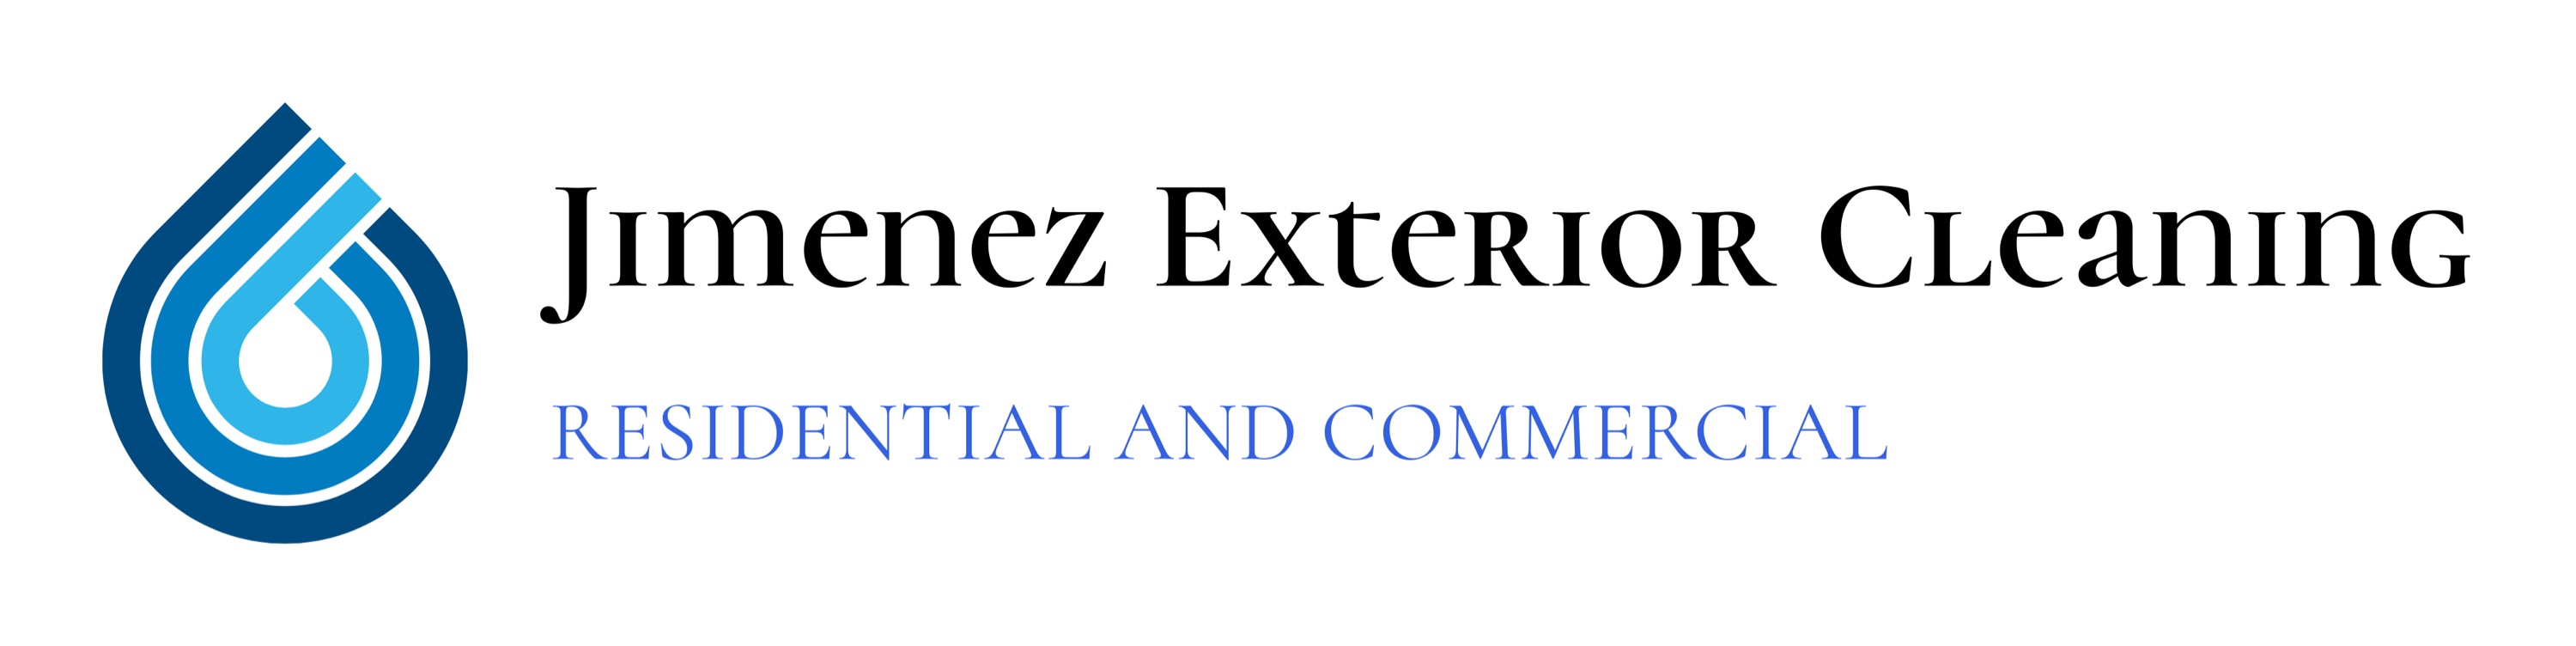 Jimenez Exterior Cleaning Logo